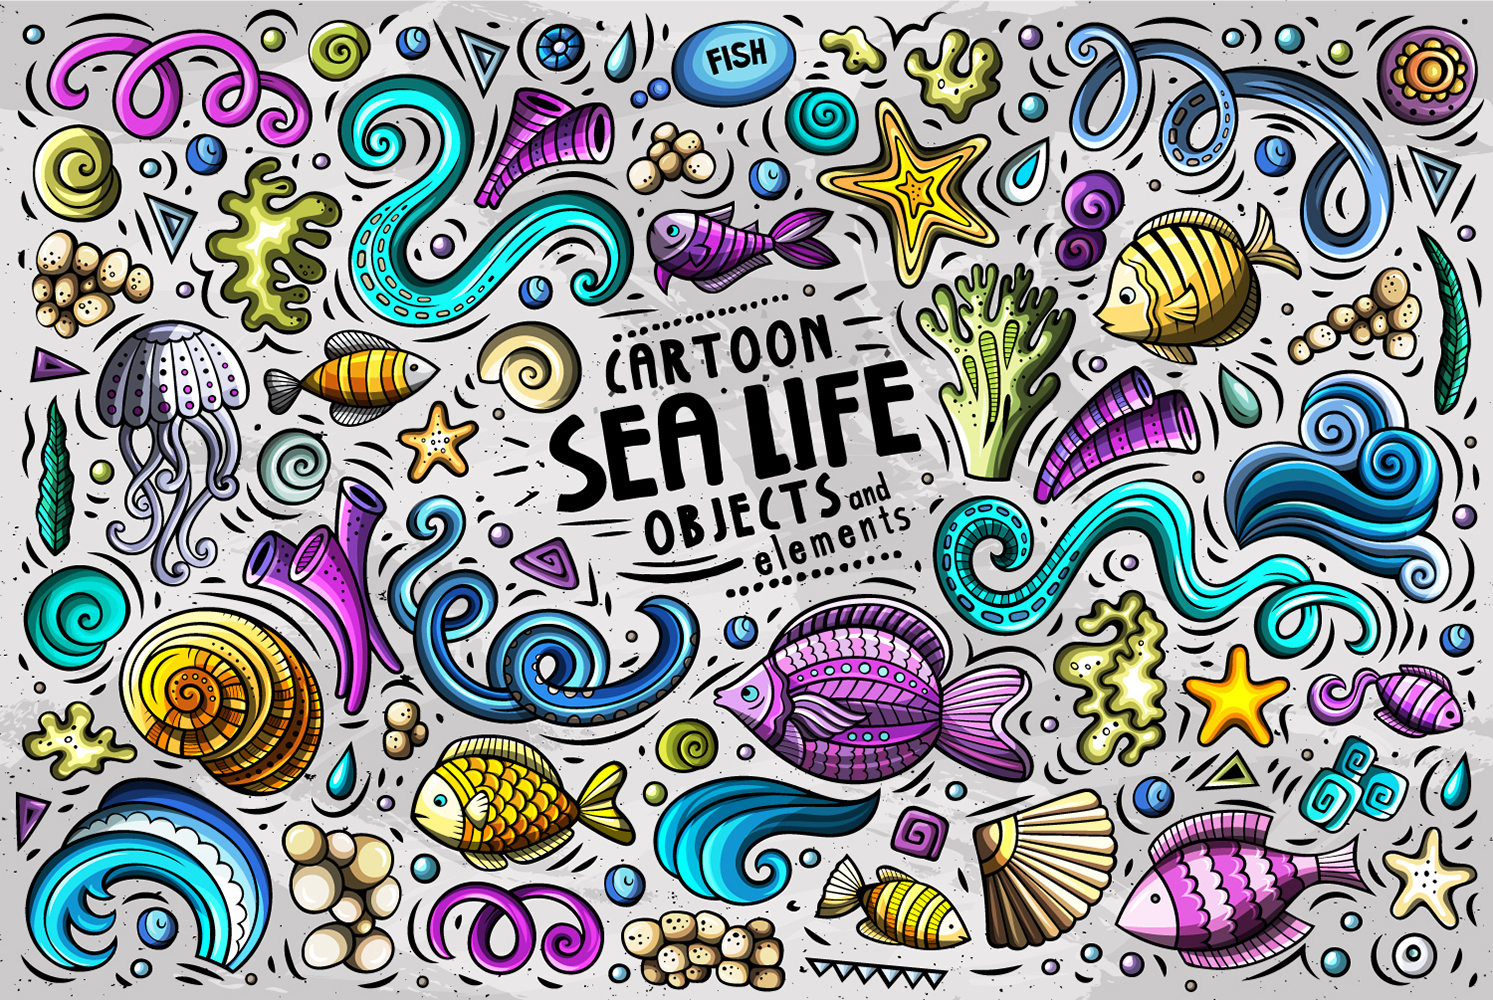 Sea Life Cartoon Doodle Objects Set - Vector Image